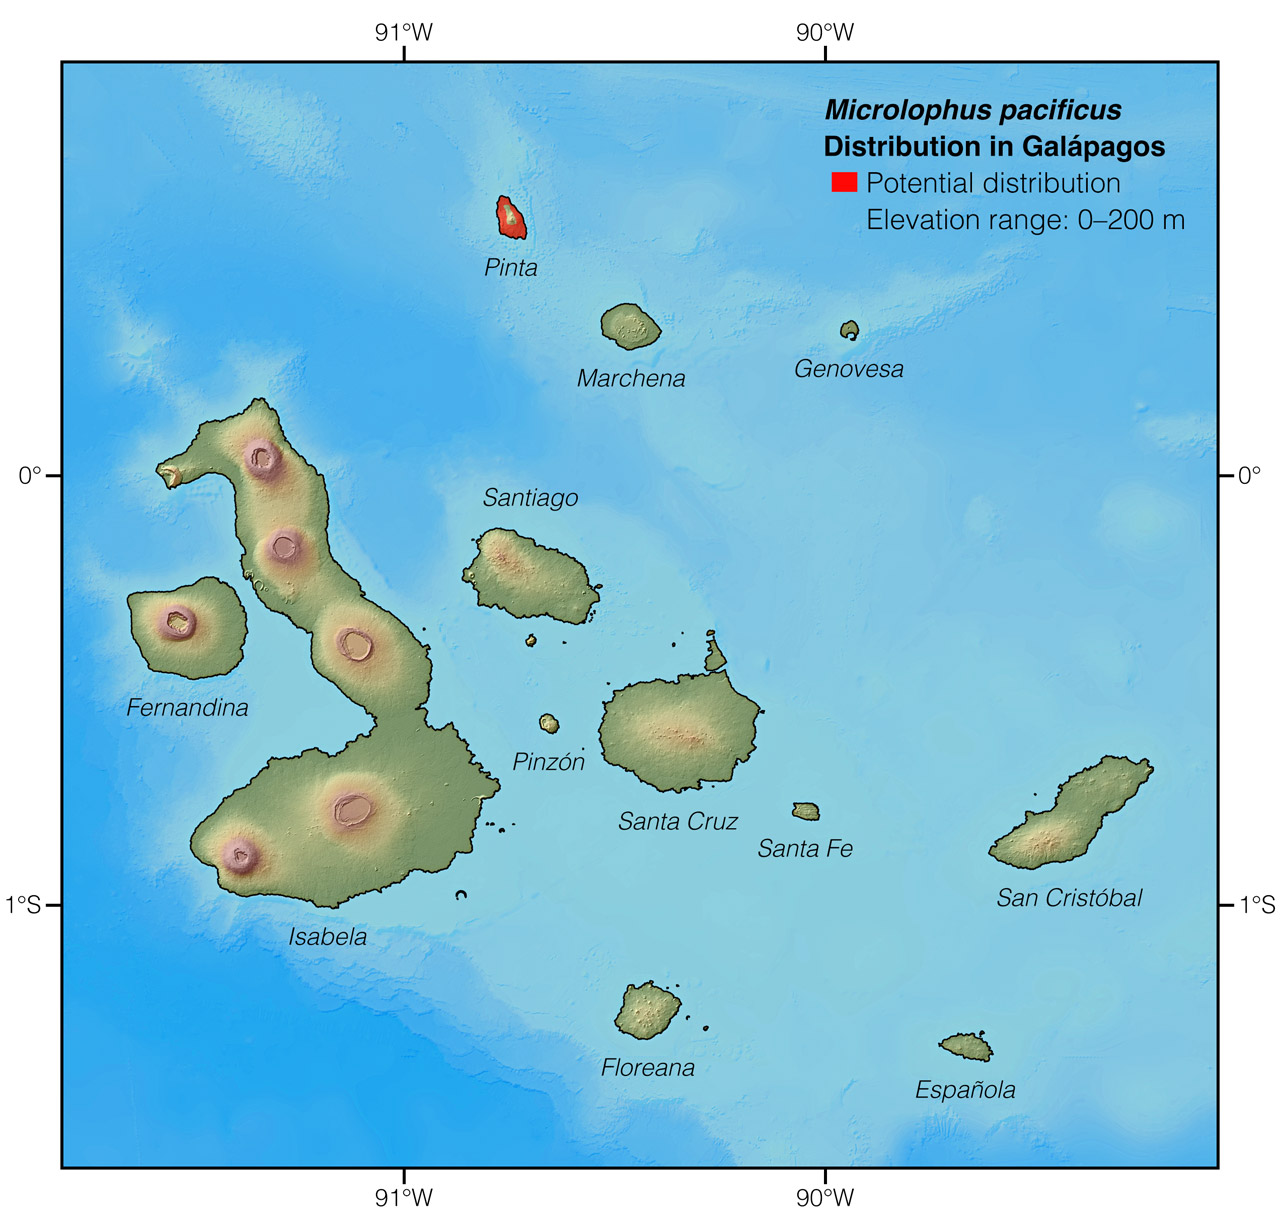 Distribution of Microlophus pacificus in Galápagos